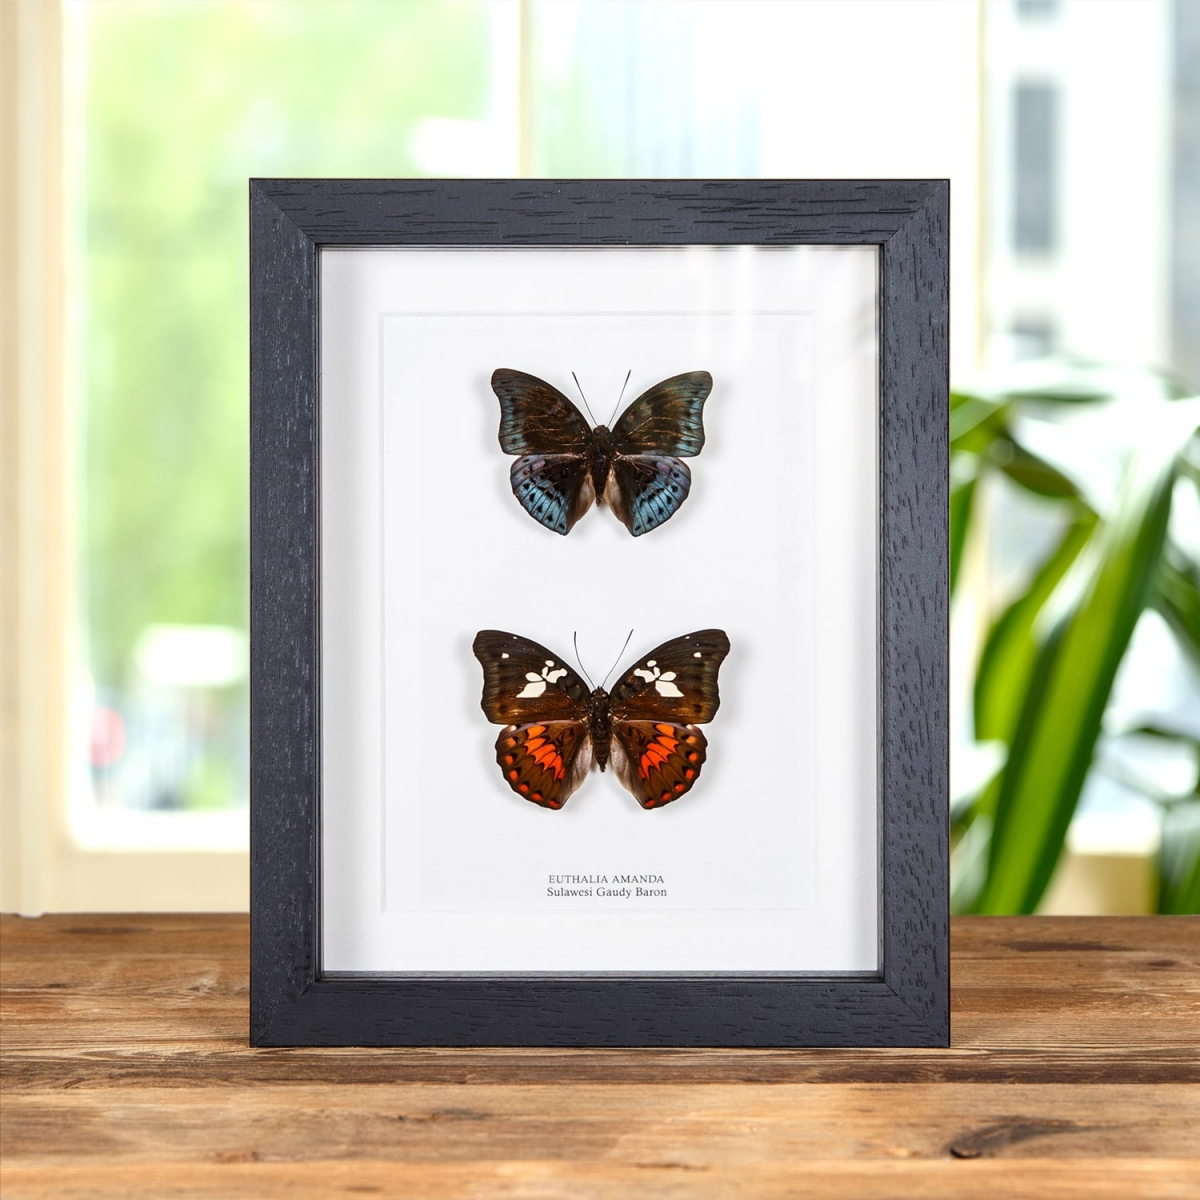 Minibeast Sulawesi Gaudy Baron Butterfly Male & Female In Box Frame (Euthalia amanda)